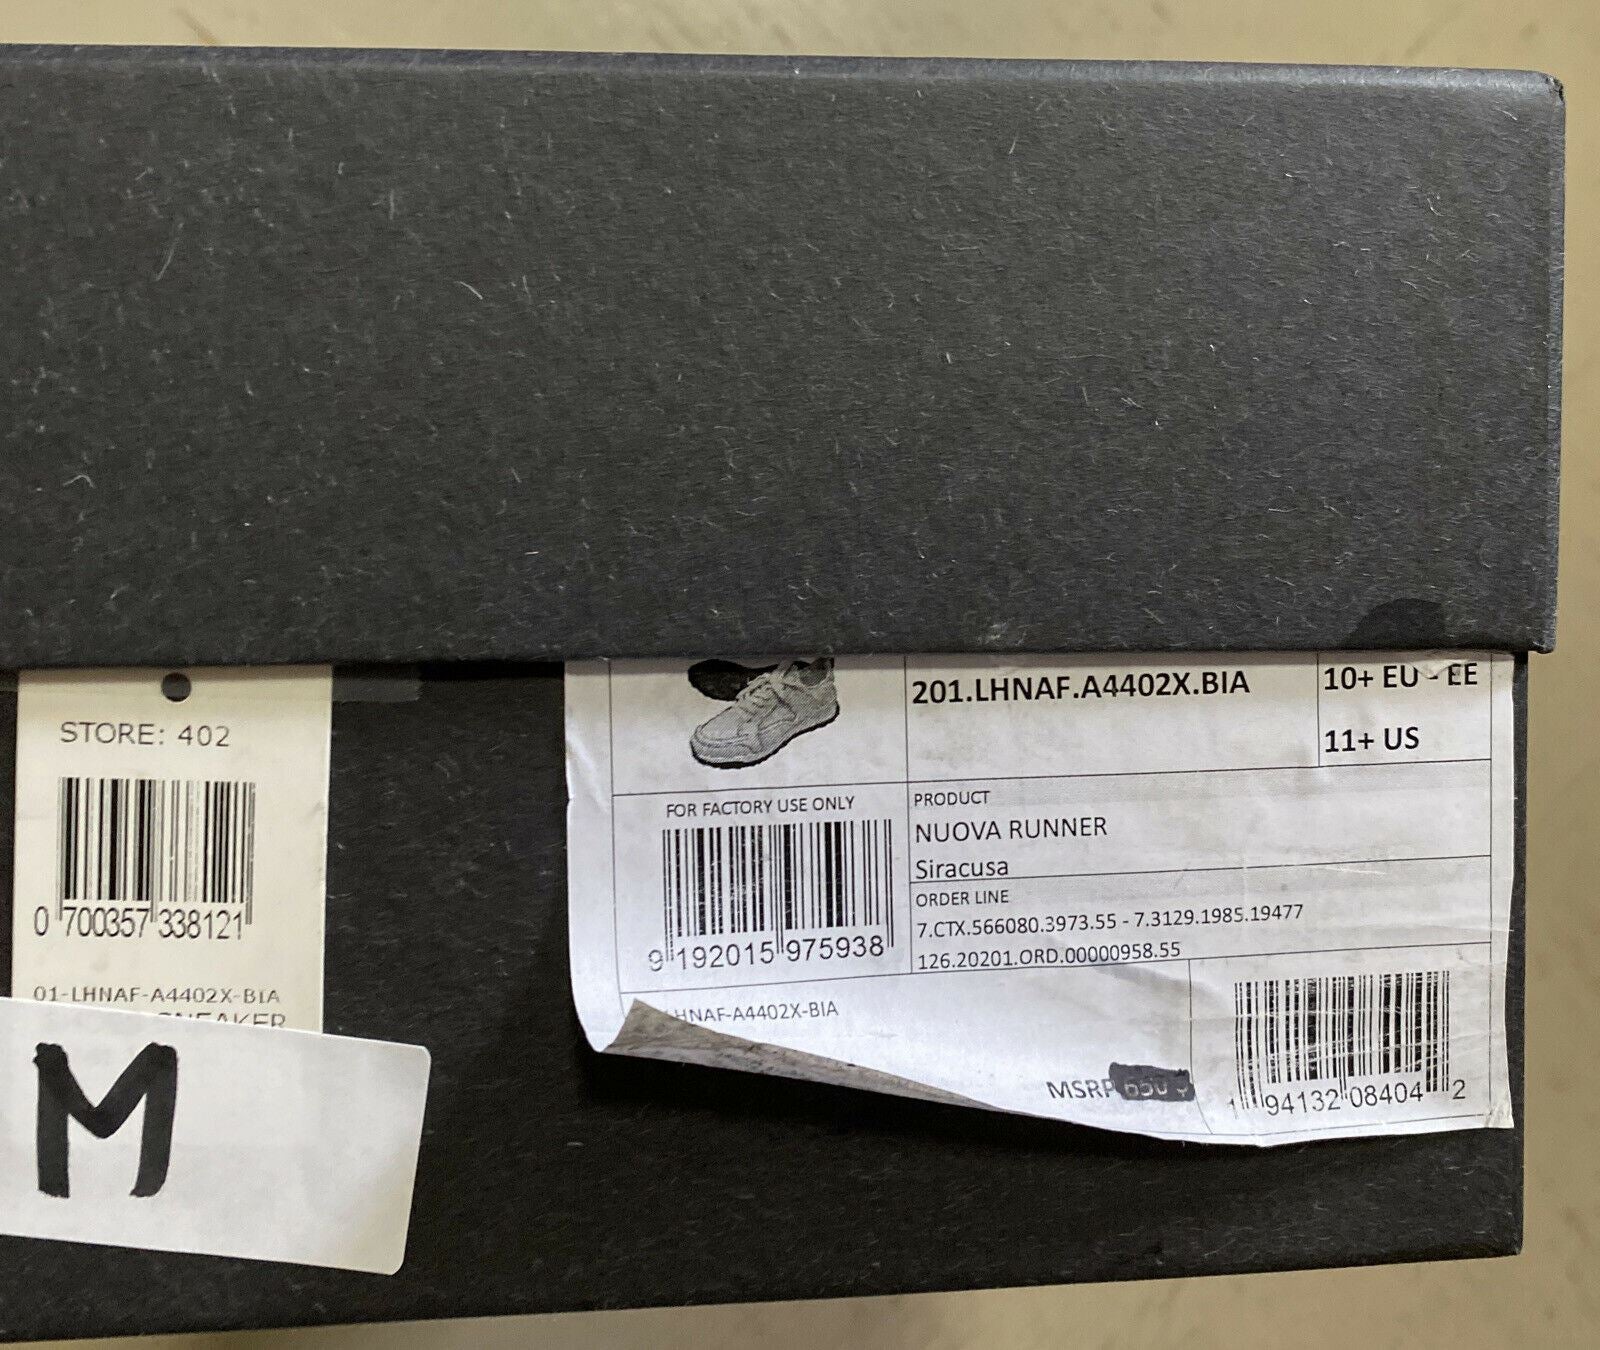 New $775 Ermenegildo Zegna Leather Sneakers Shoes White 11.5 US Italy